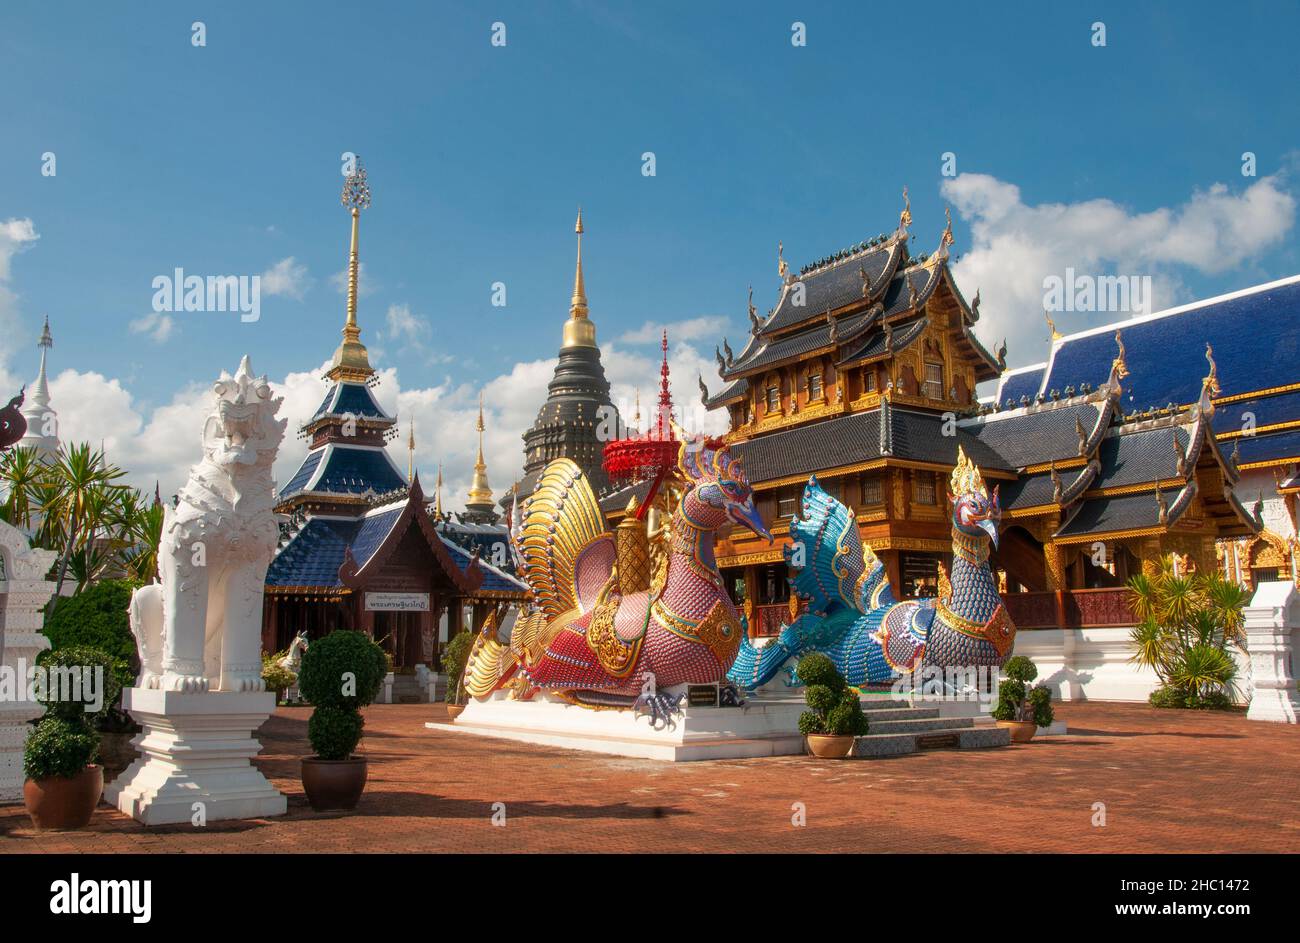 Thailand: Wat Ban Den, Ban Inthakin, Bezirk Mae Taeng, Chiang Mai. Wat Ban Den, auch bekannt als Wat Bandensali Si Mueang Kaen, ist ein großer buddhistischer Tempelkomplex nördlich der Stadt Chiang Mai im Norden Thailands. Stockfoto